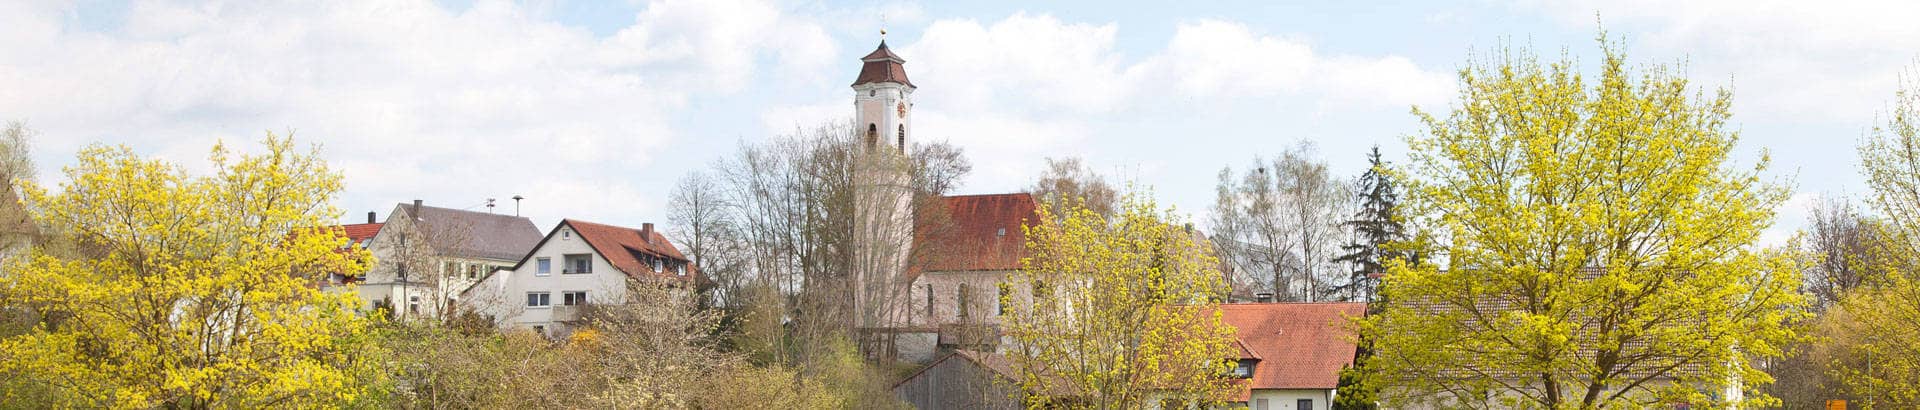 Dorfkirche St. Laurentius Donaustetten